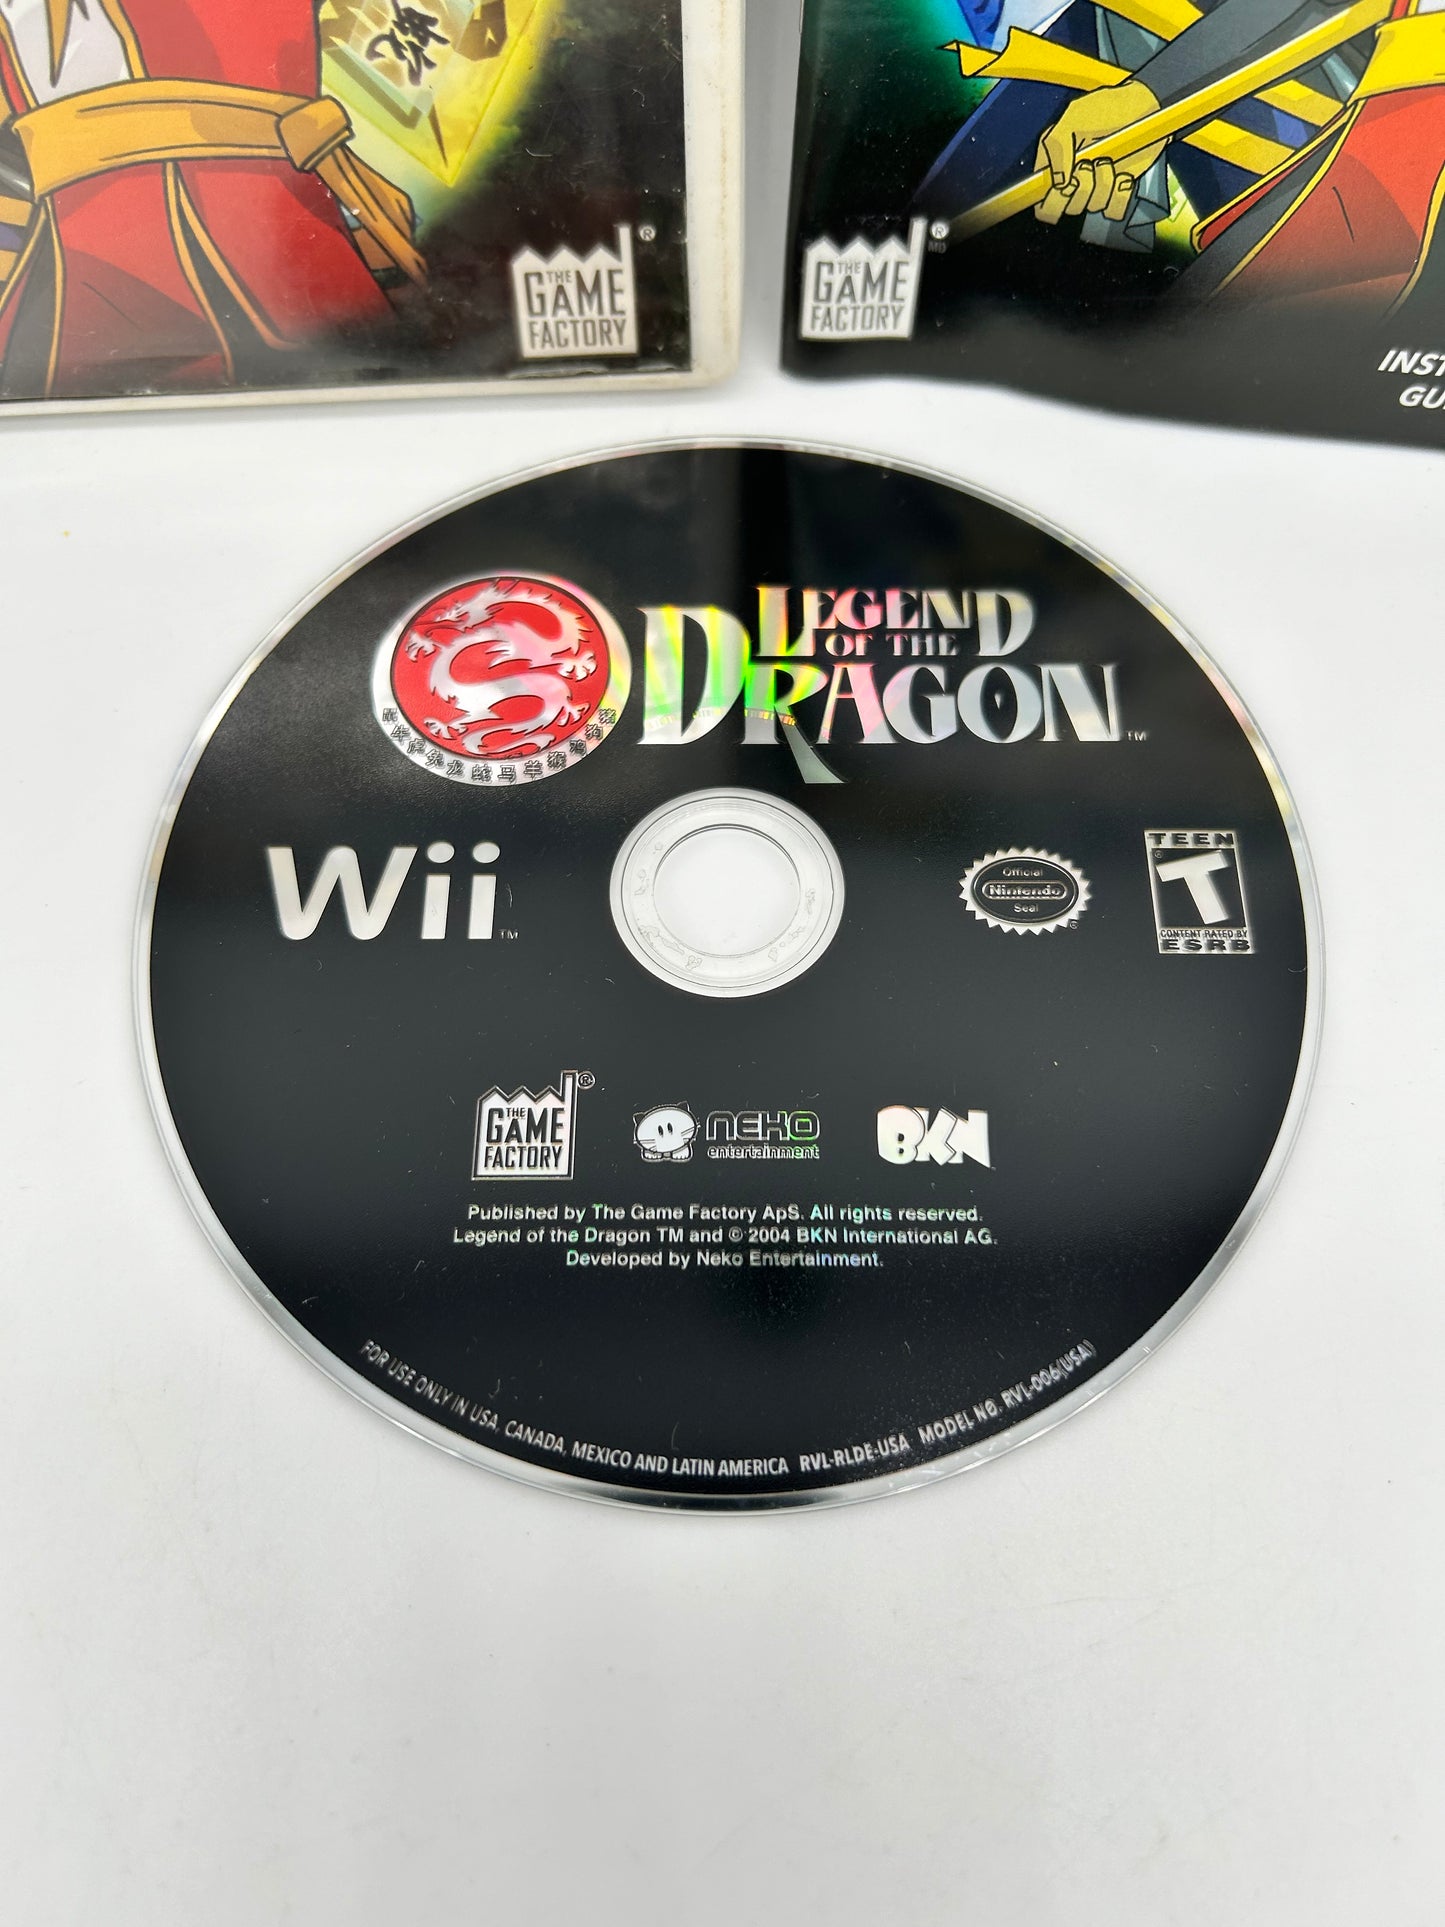 NiNTENDO Wii | LEGEND OF DRAGON